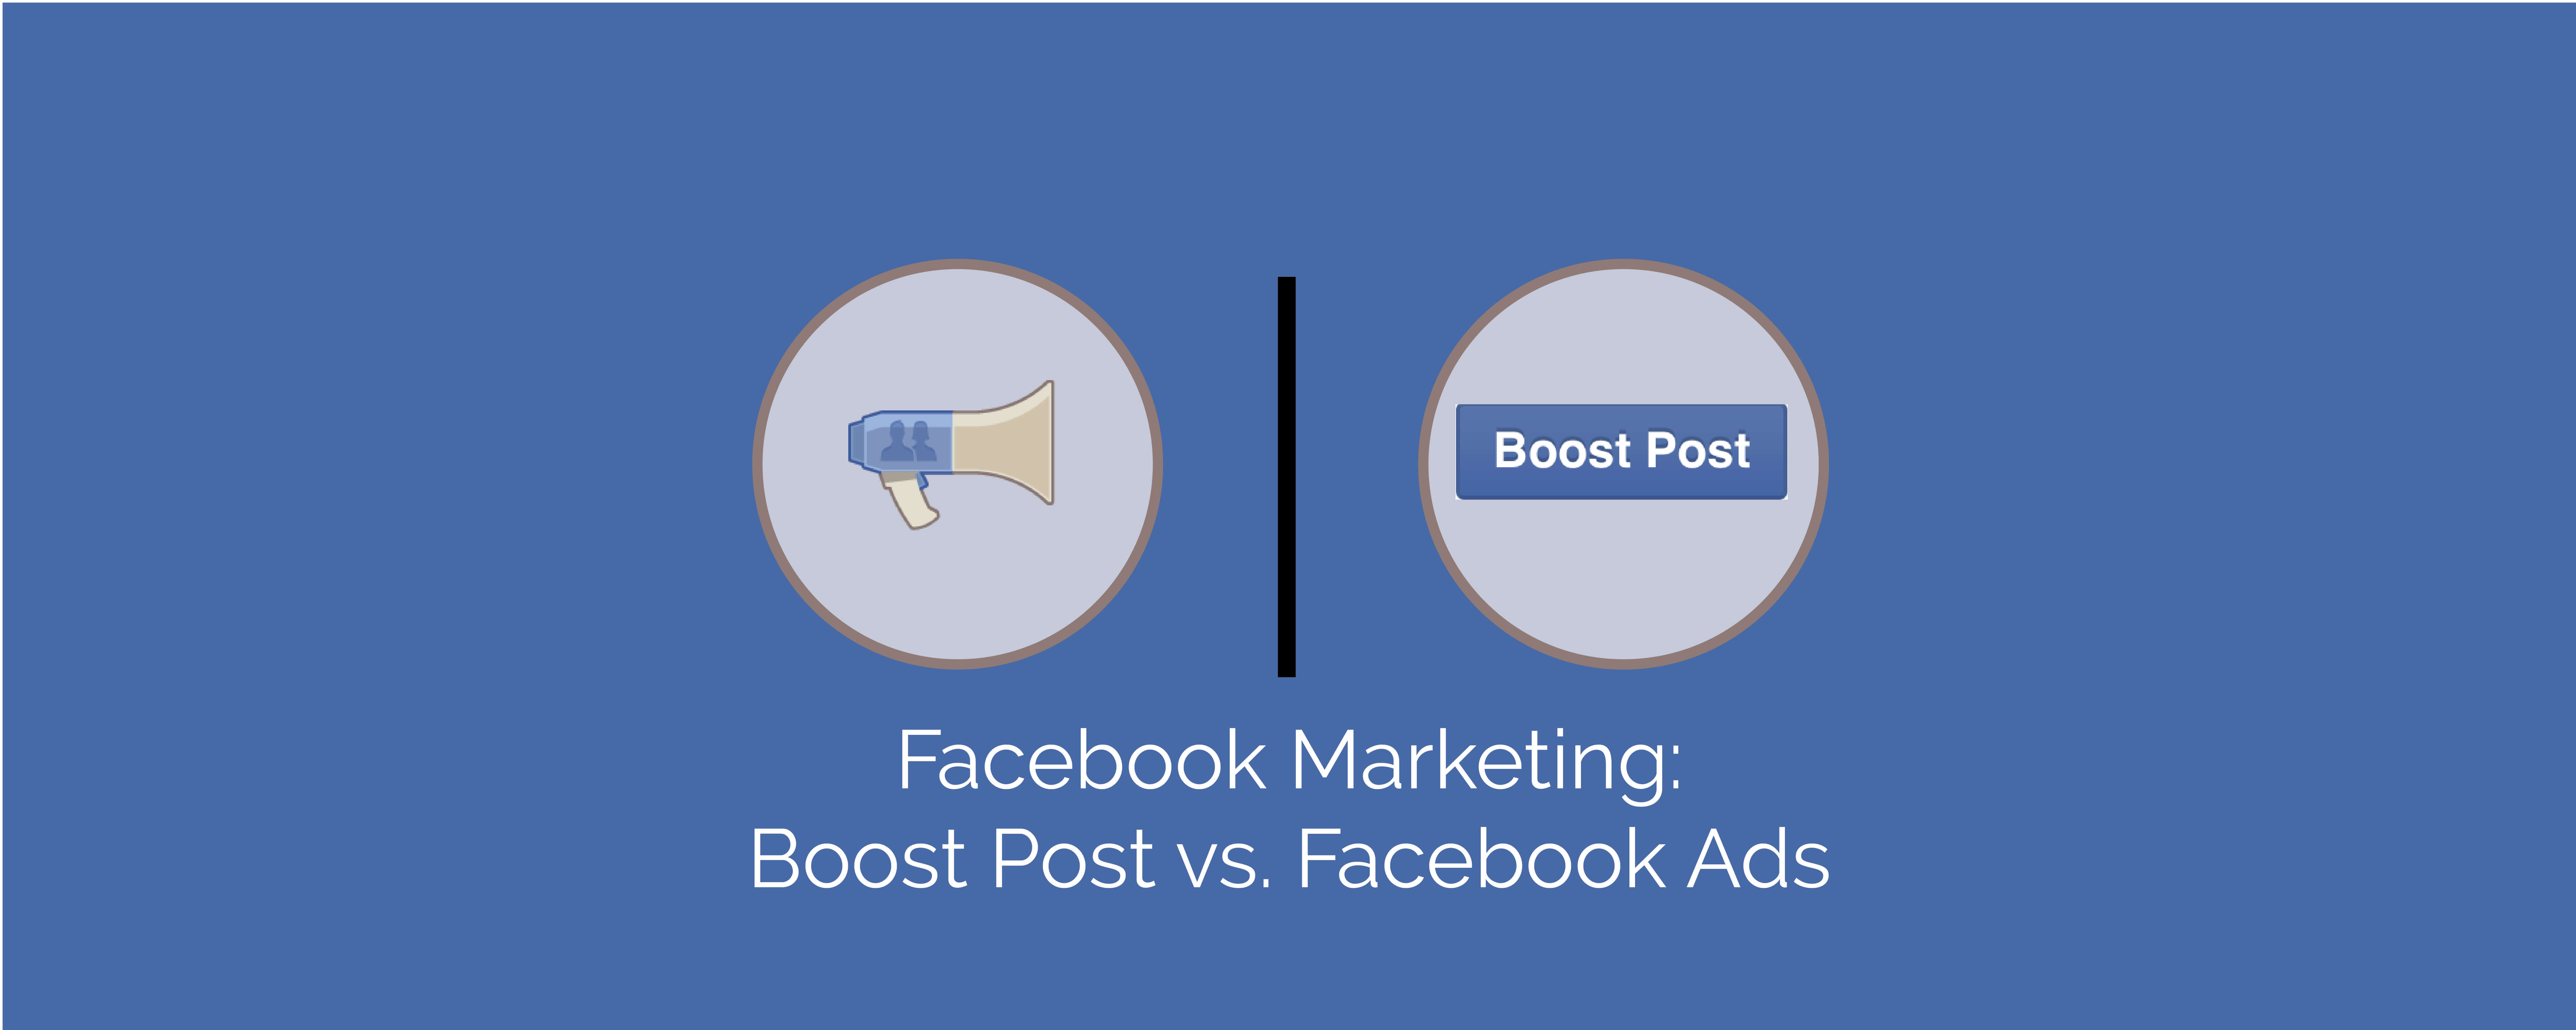 Facebook Boost Logo - Shark Bytes. Facebook Marketing: Boost Post vs. Facebook Ads